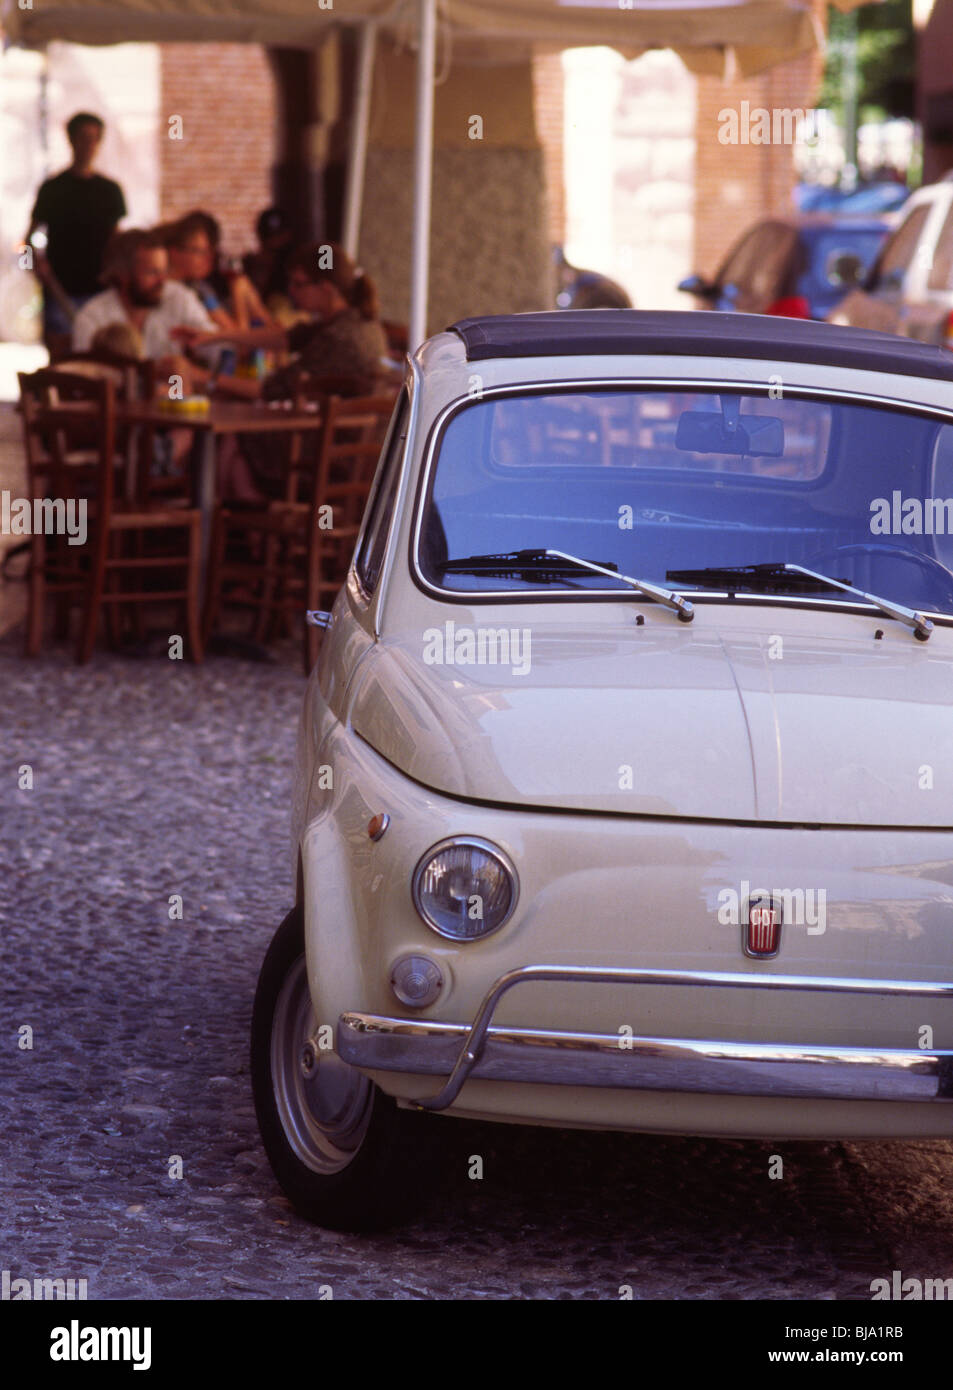 Fiat 500 on quaint cobble-stoned alleyway in Verona, Italy. Stock Photo